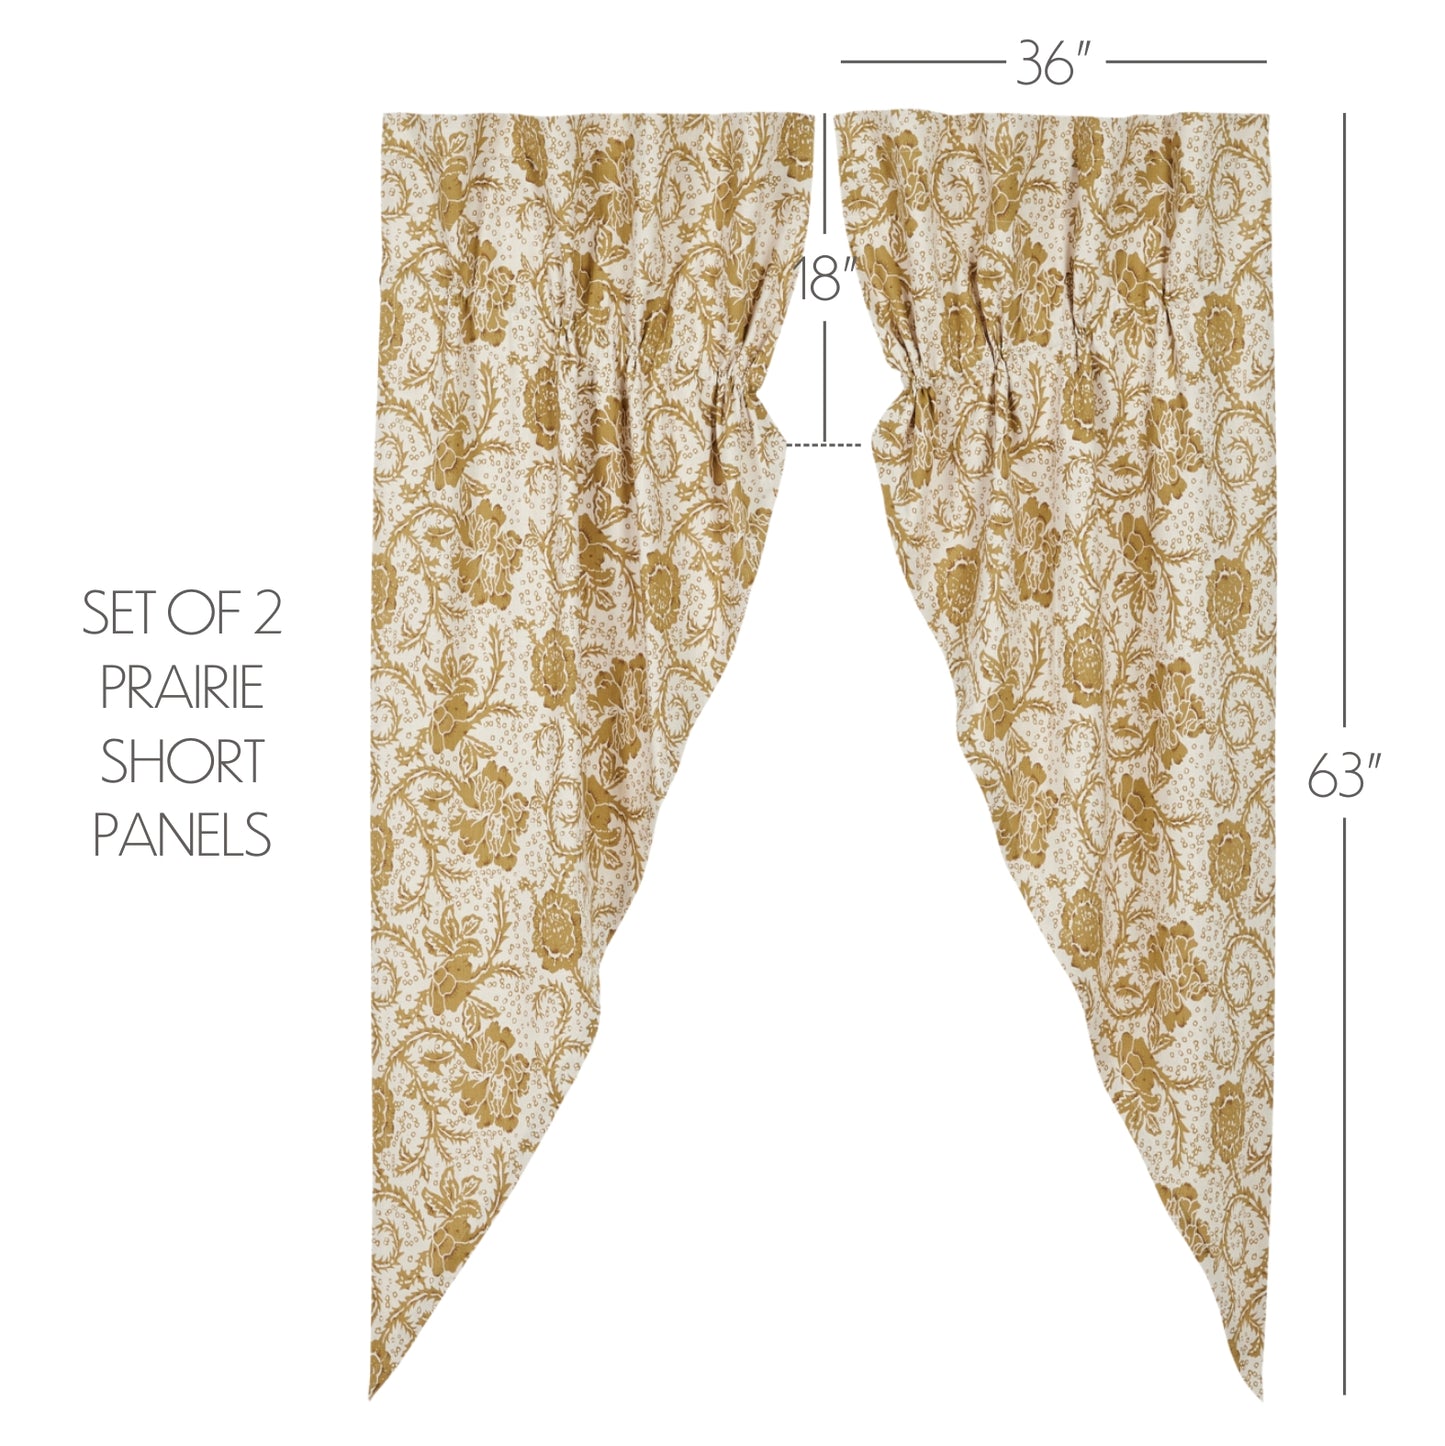 81202-Dorset-Gold-Floral-Prairie-Short-Panel-Set-of-2-63x36x18-image-1